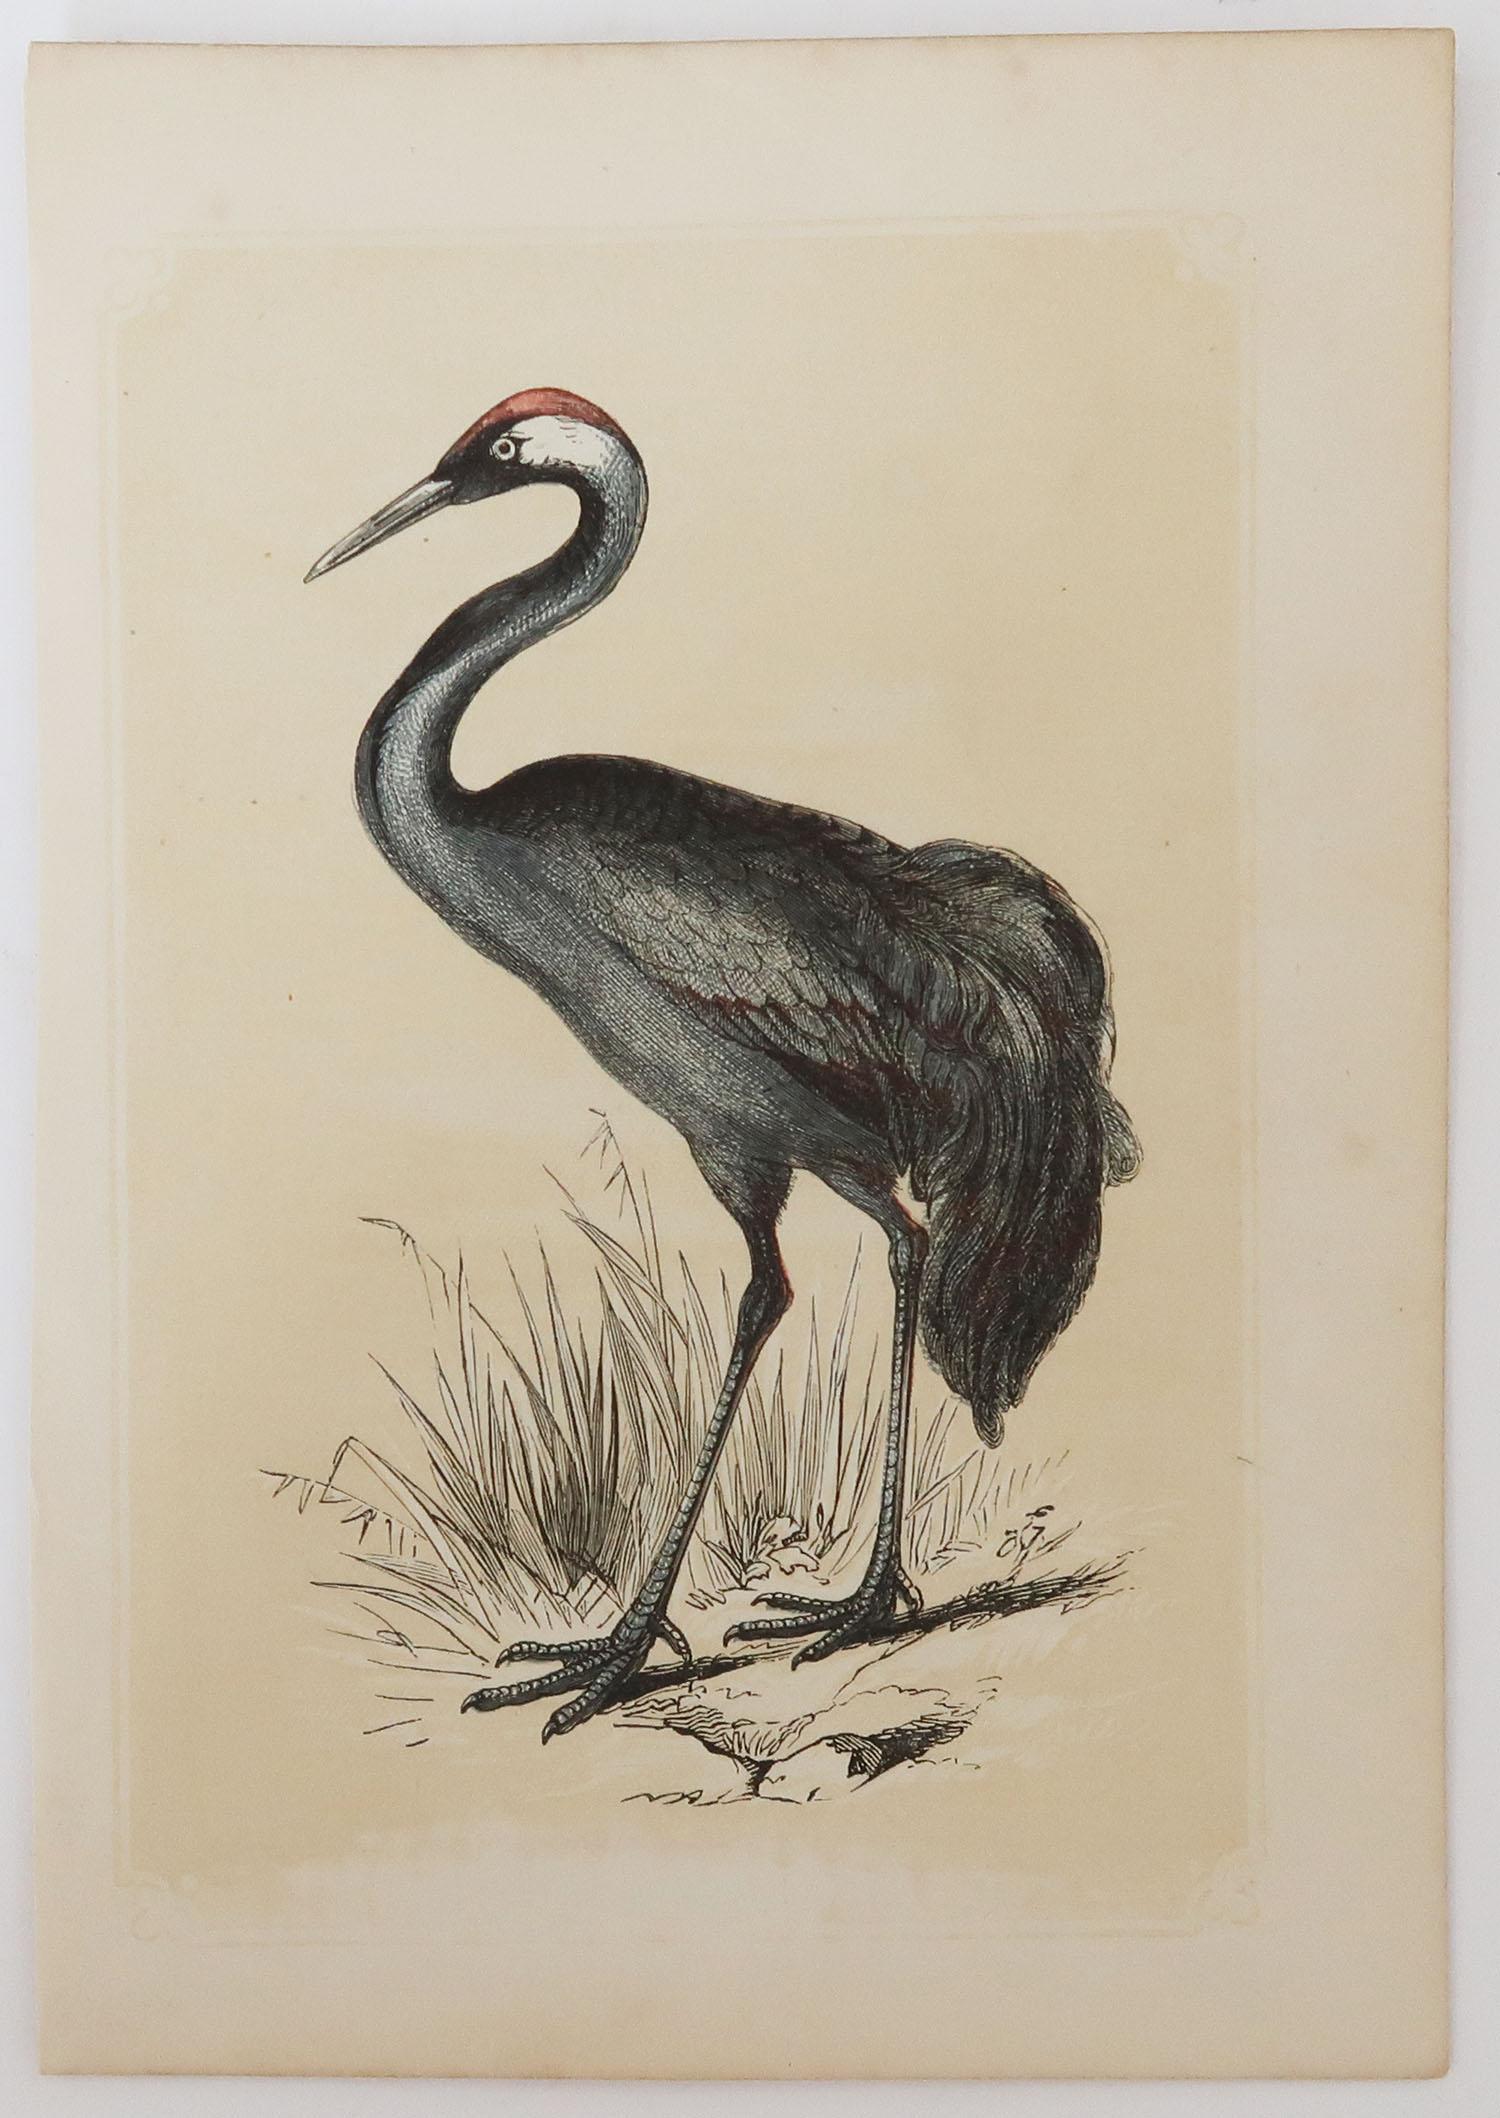 Folk Art Original Antique Bird Print, the Crane, Tallis, circa 1850